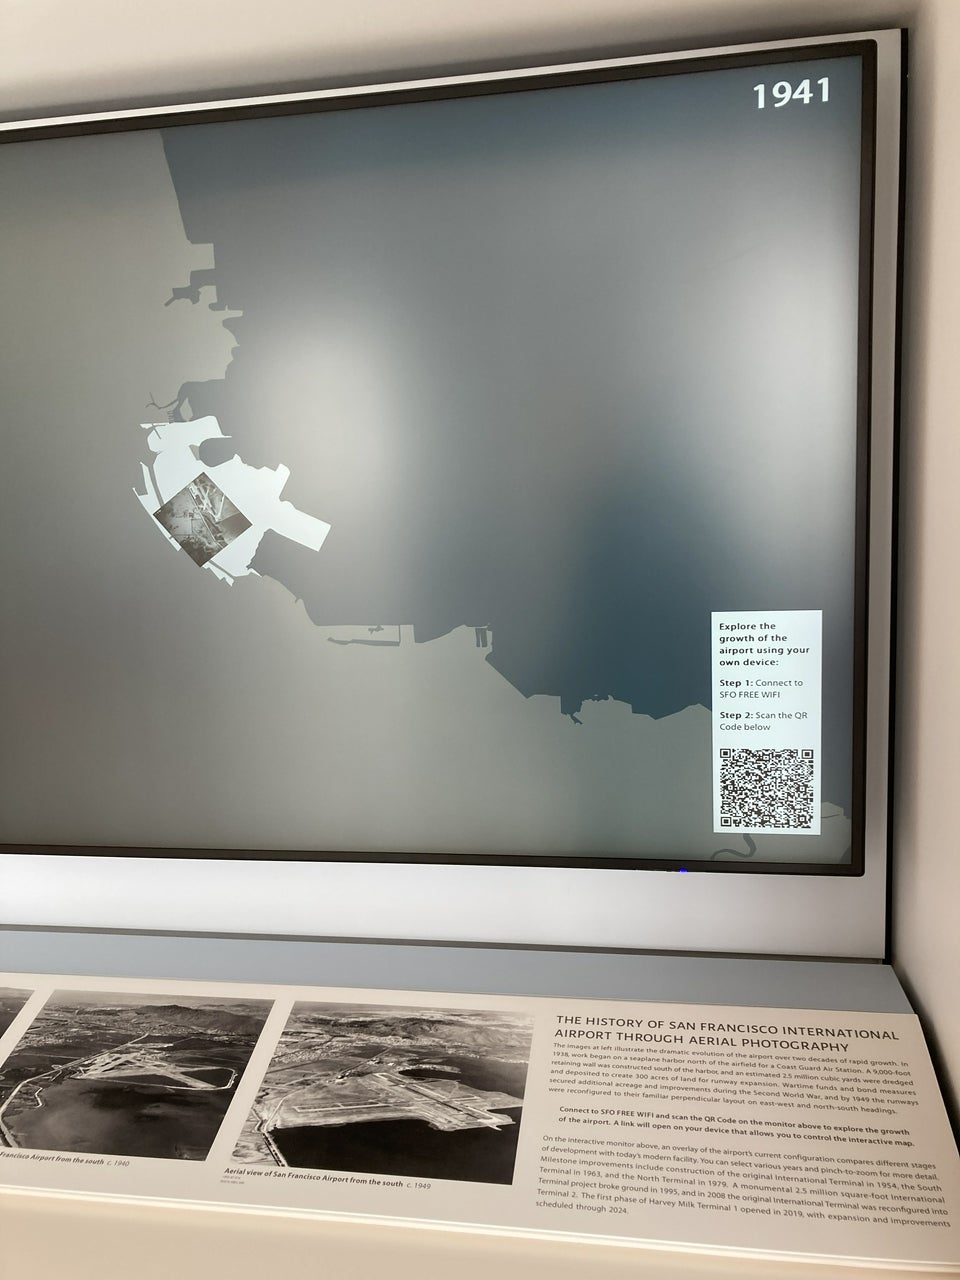 Interactive monitor (view 2) in SkyTerrace gallery, SFO